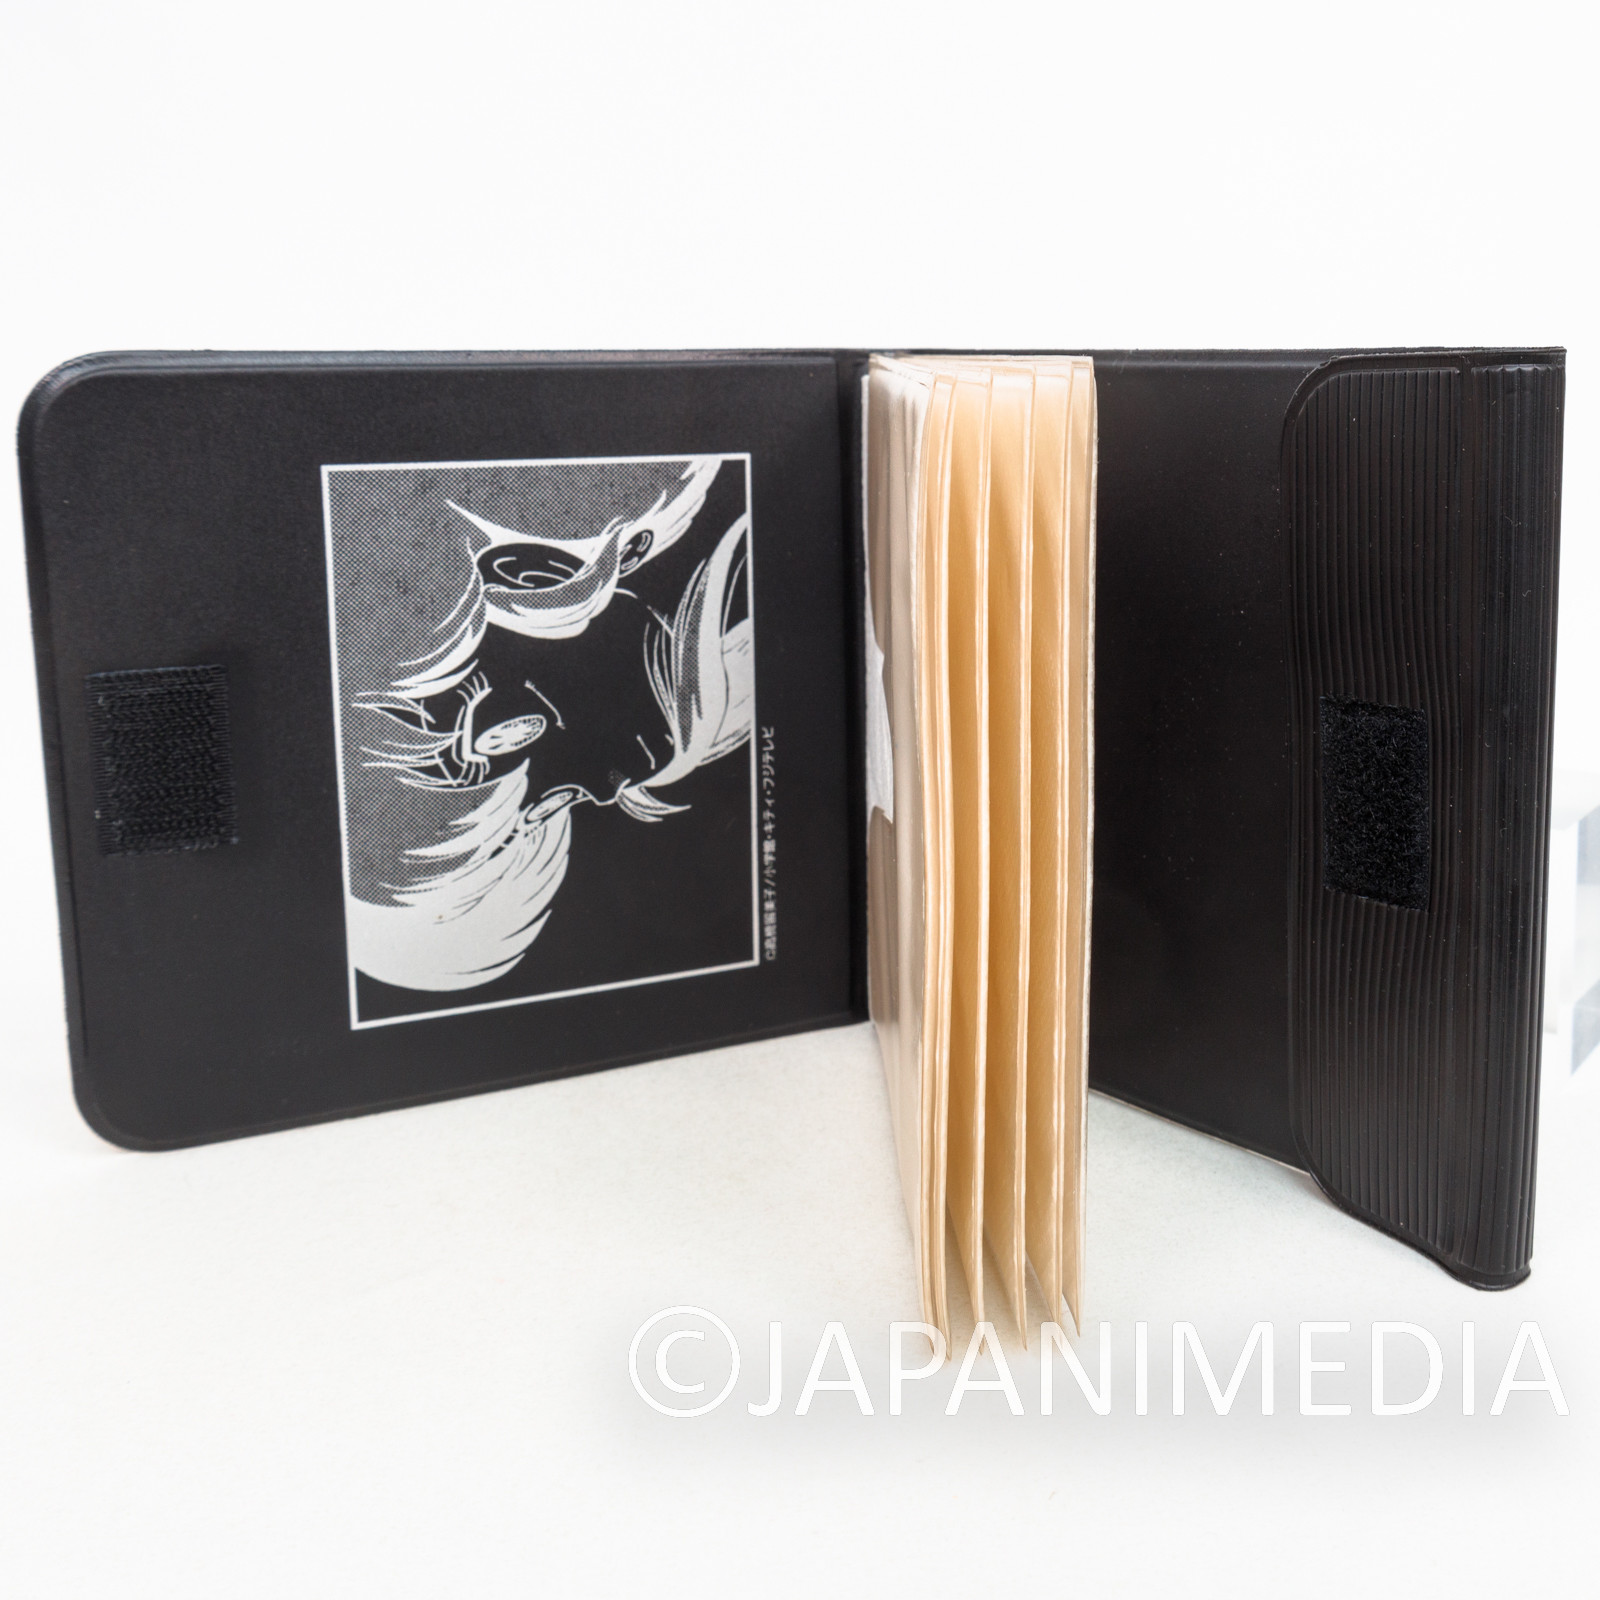 Retro RARE! Maison Ikkoku CD Disk Case Holder JAPAN ANIME MANGA RUMIKO TAKAHASHI 2